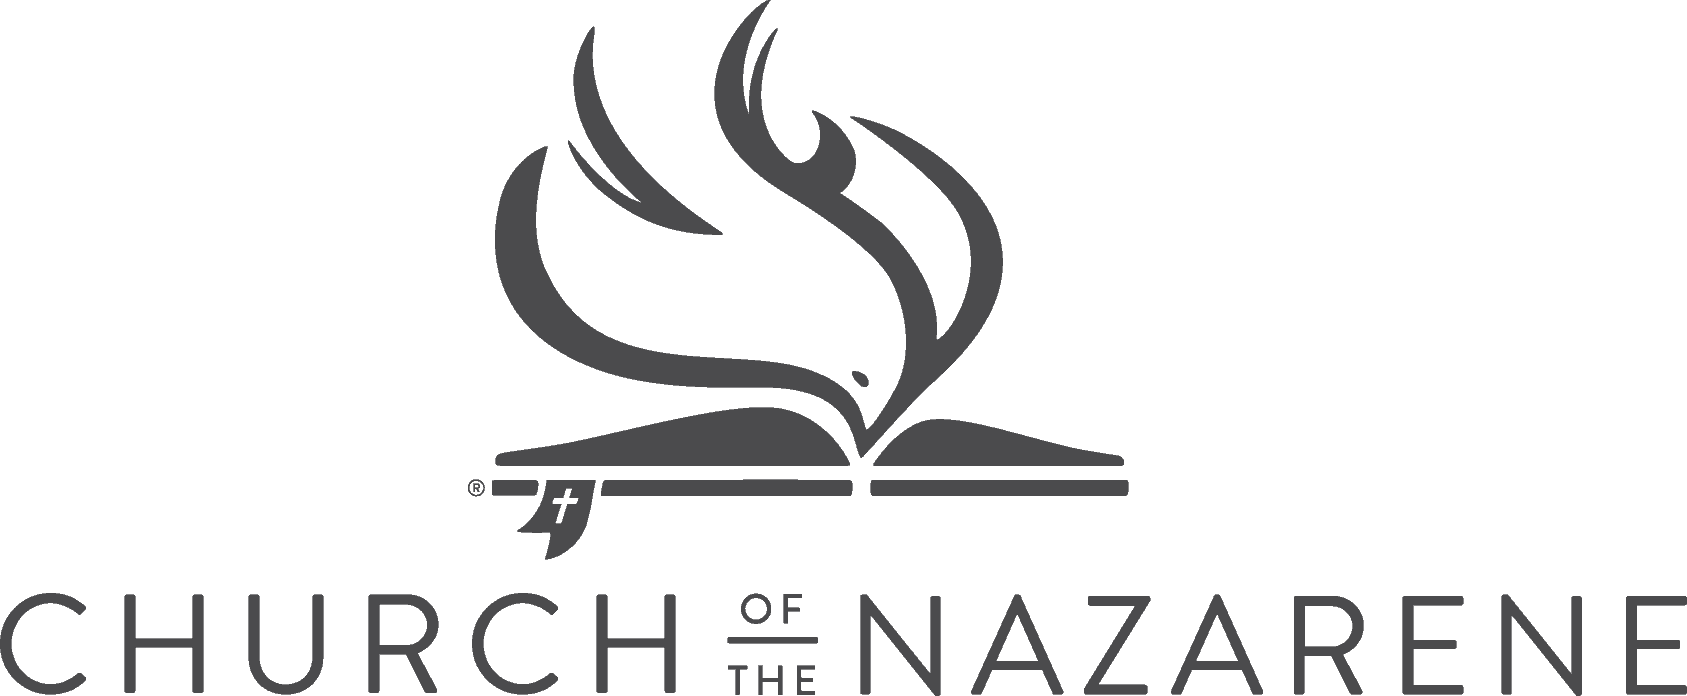 Nazarene-logo-wide-text